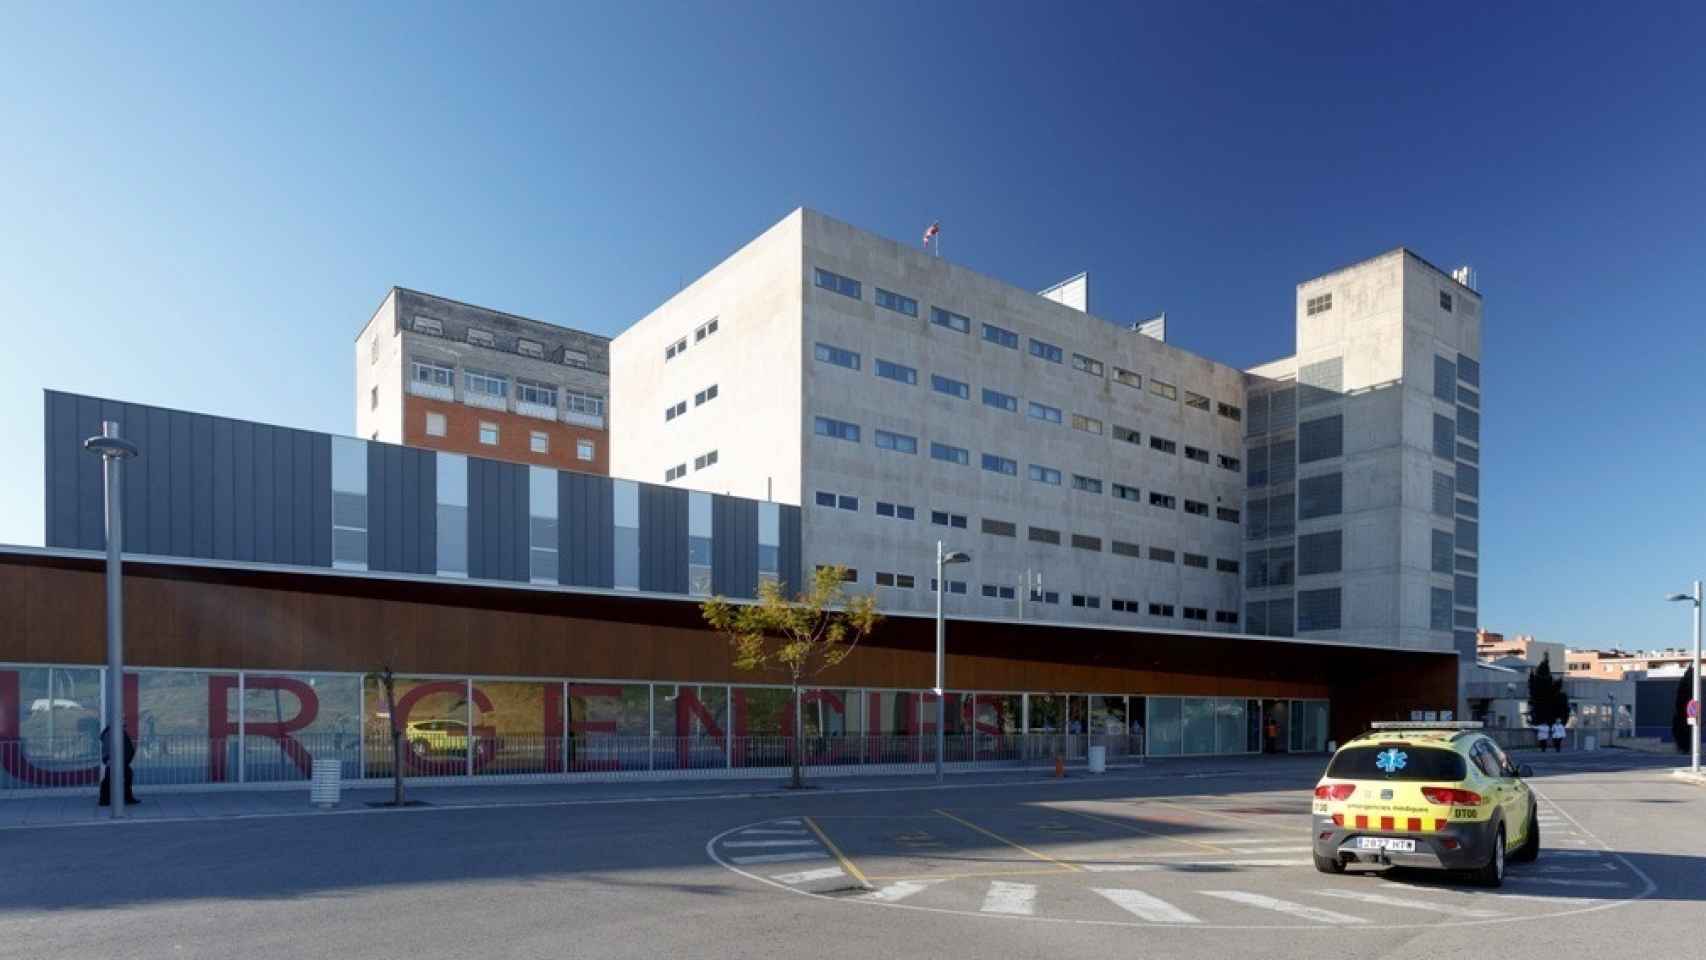 Servicio de urgencias del Hospital Joan XXIII de Tarragona